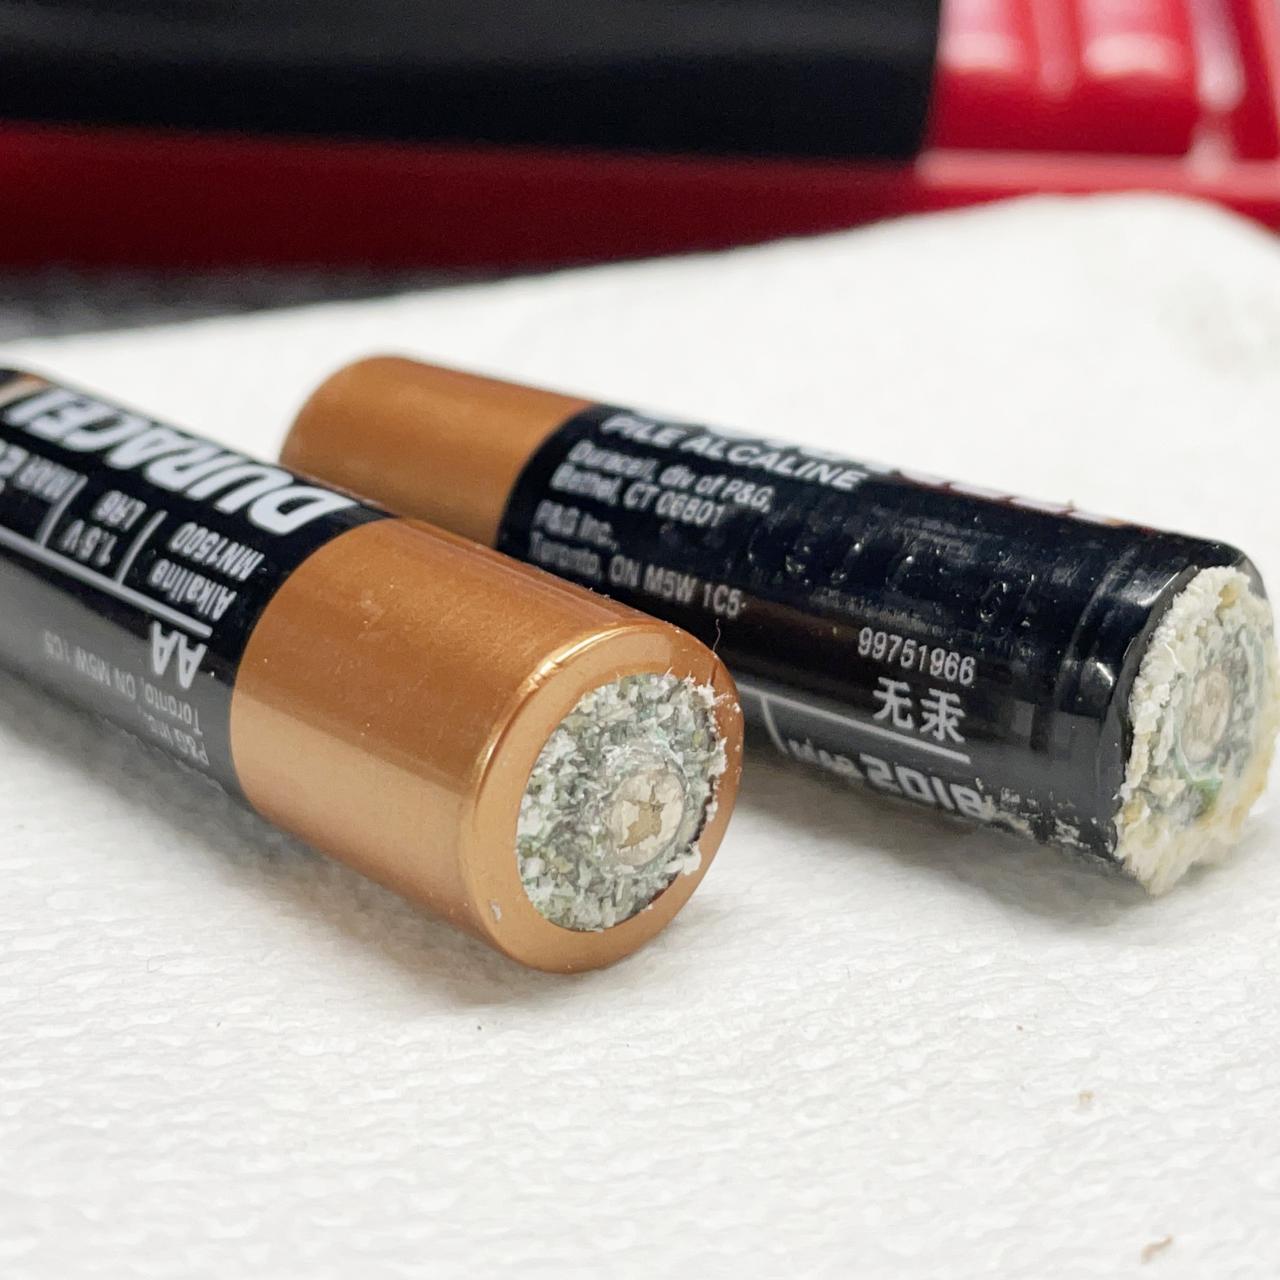 rytme Kiks Overholdelse af How to Clean Battery Corrosion Safely | HGTV